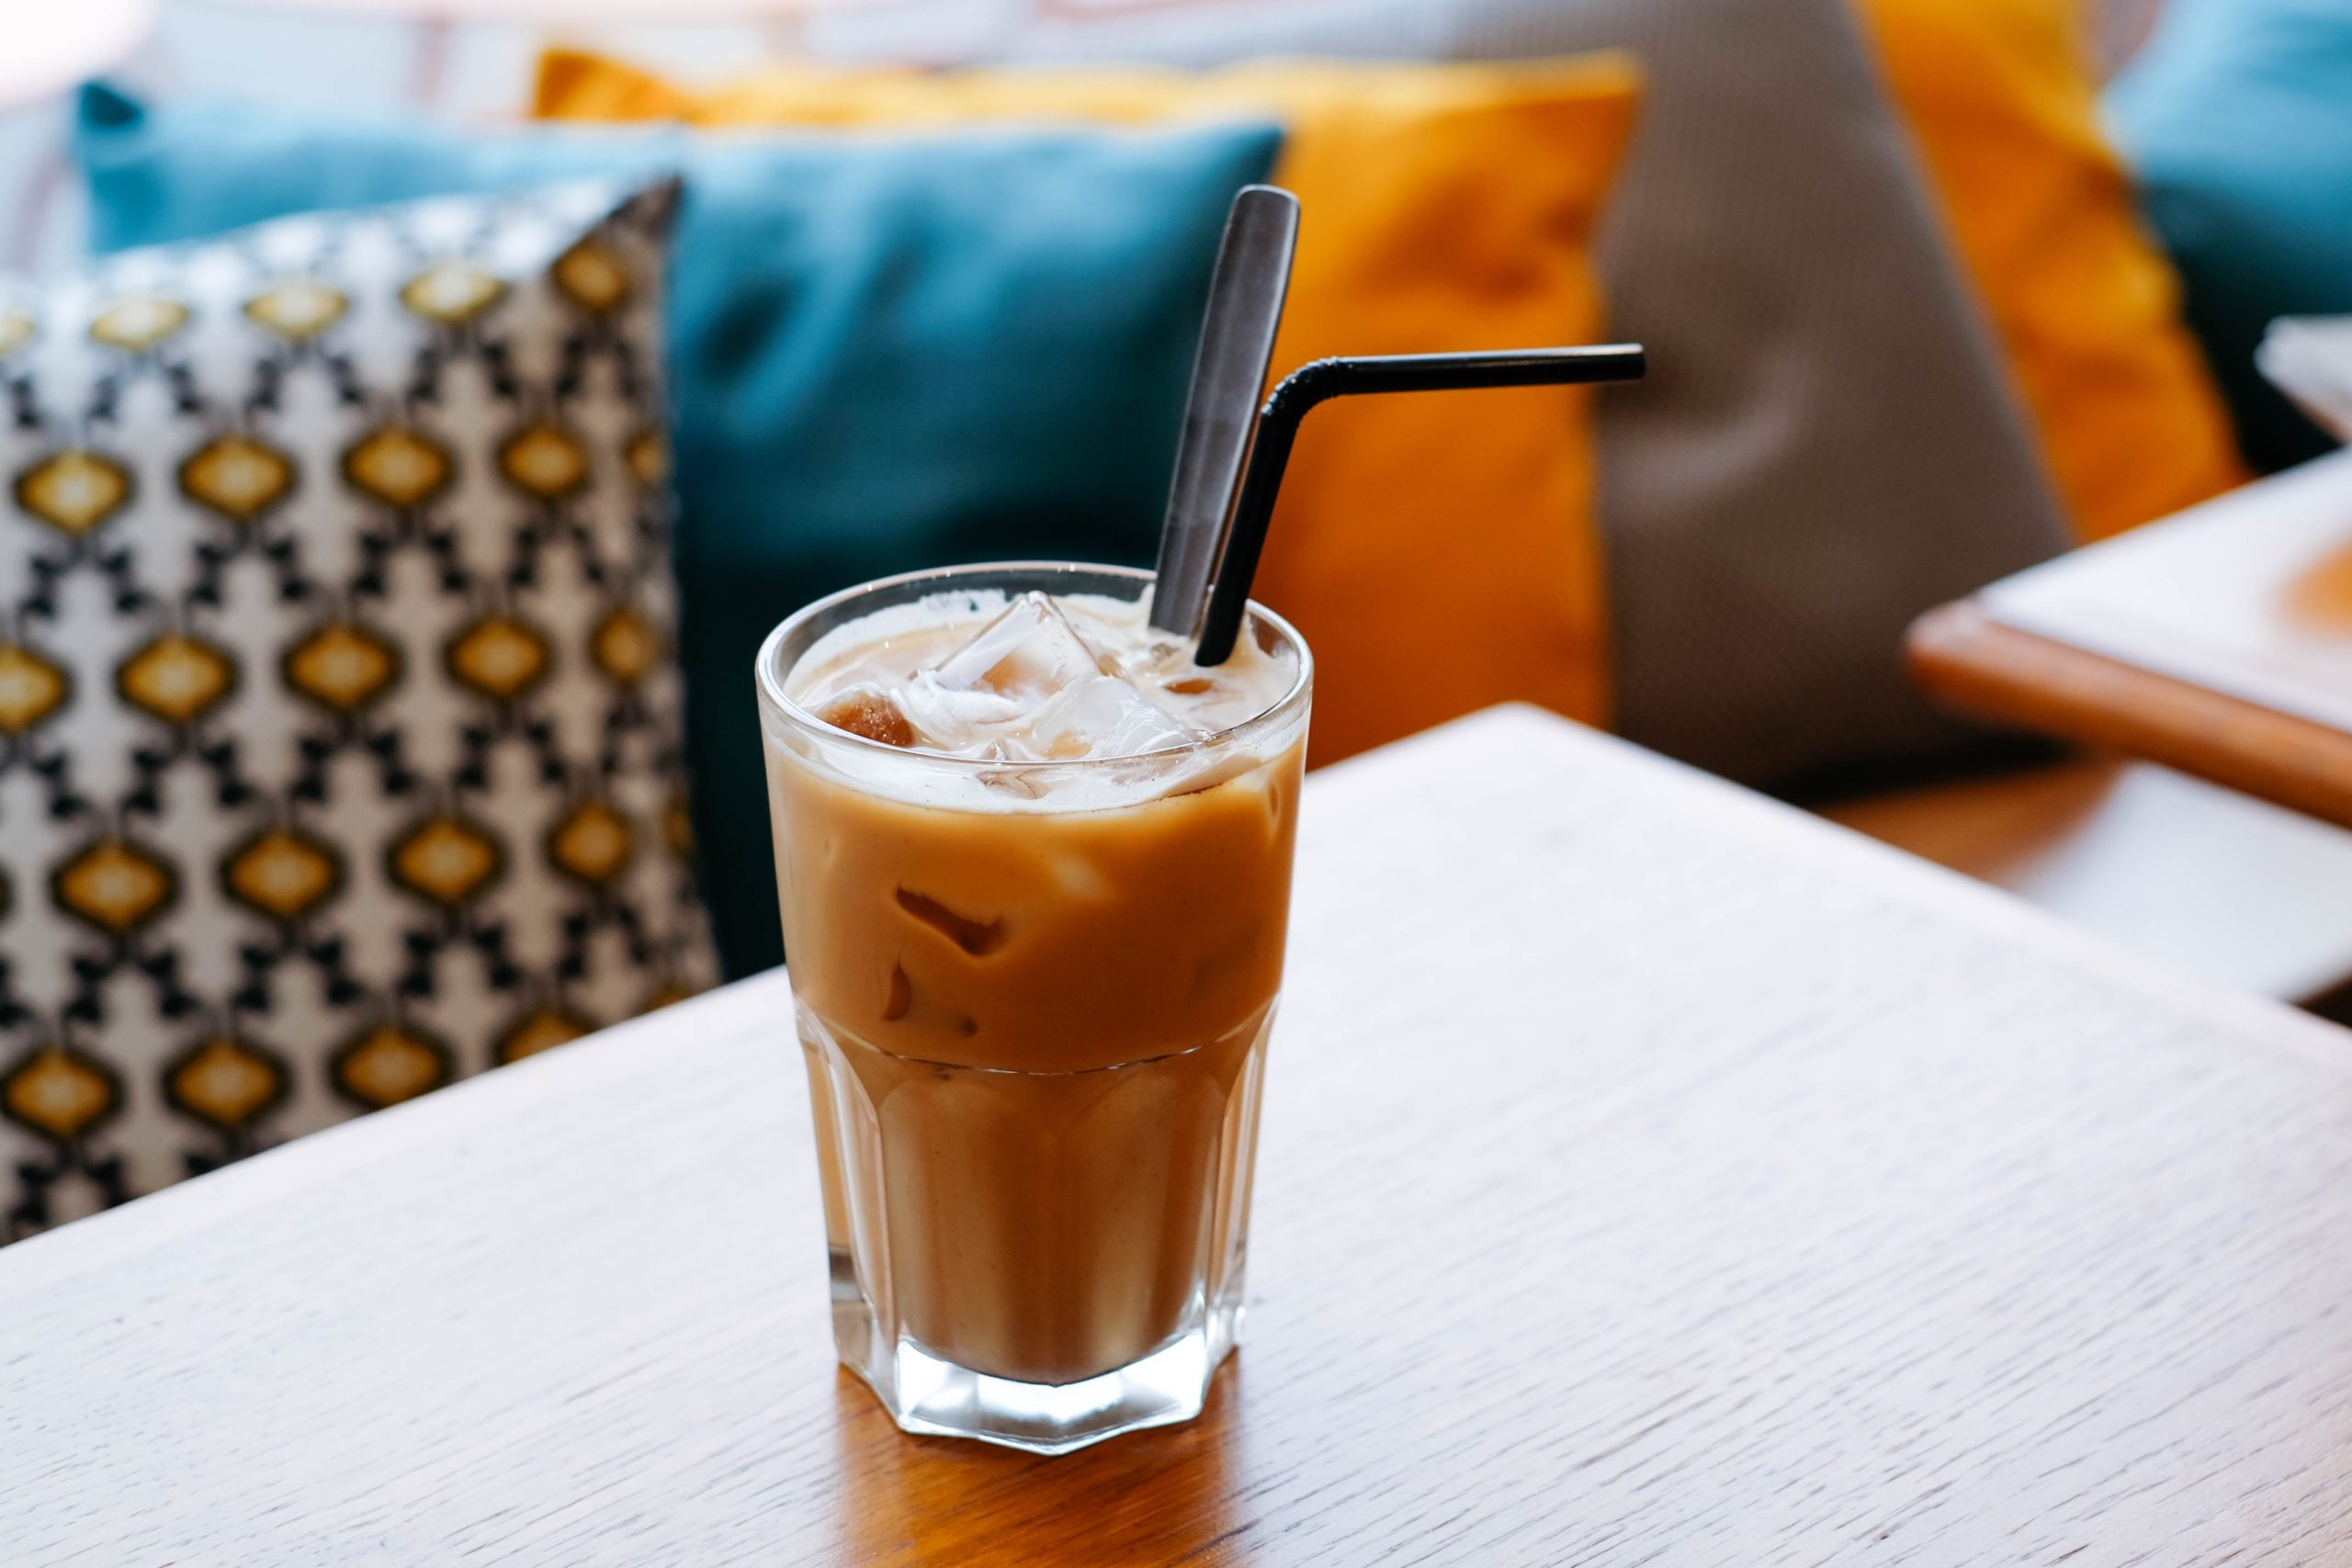 DIY: How To Make Starbucks-Like Iced Coffee @ Home